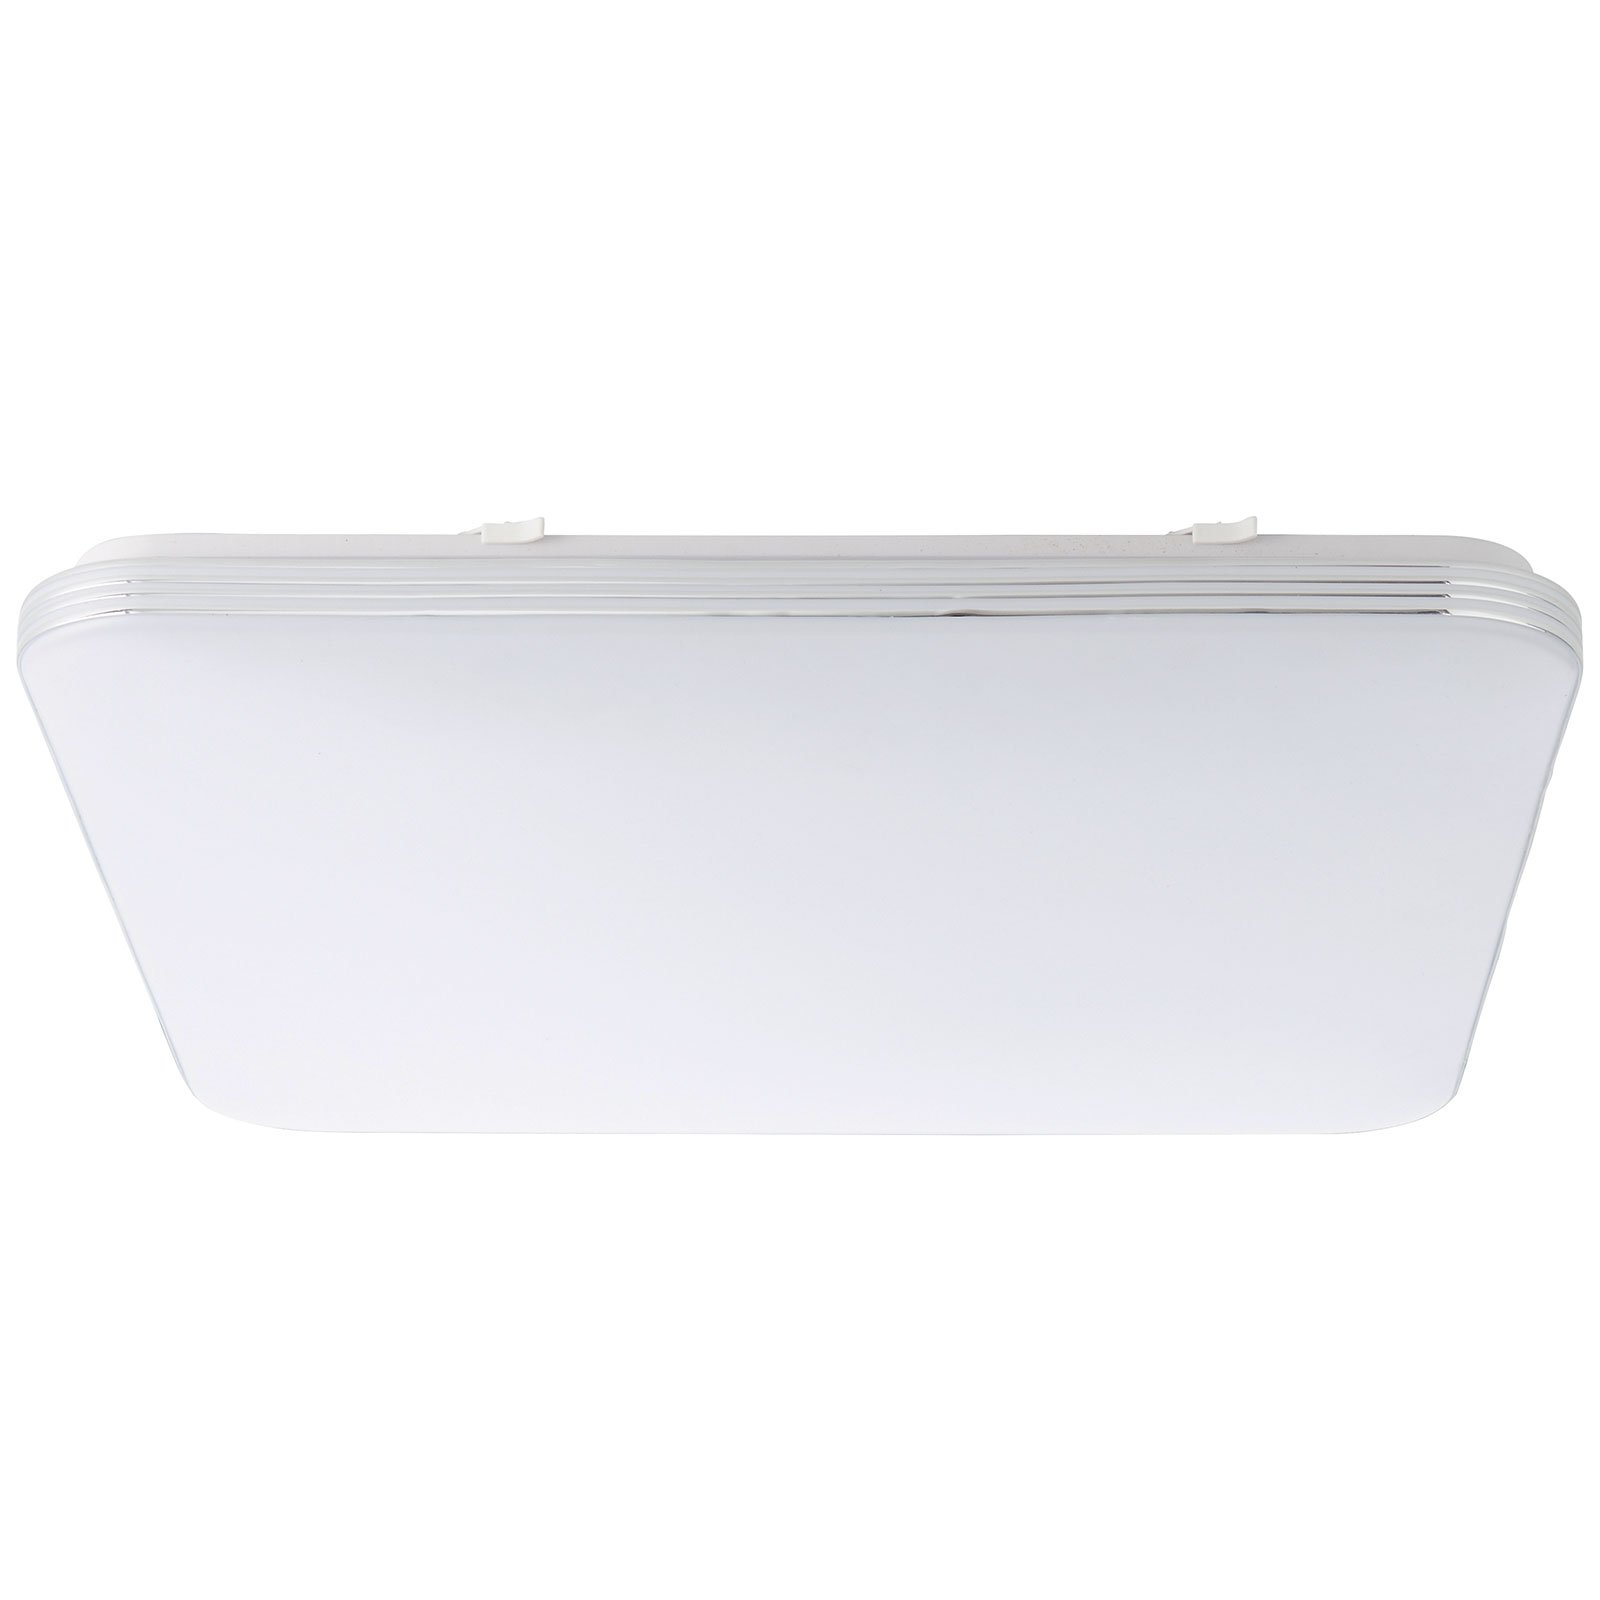 Lampa sufitowa LED Ariella biała/chrom, 54x54 cm